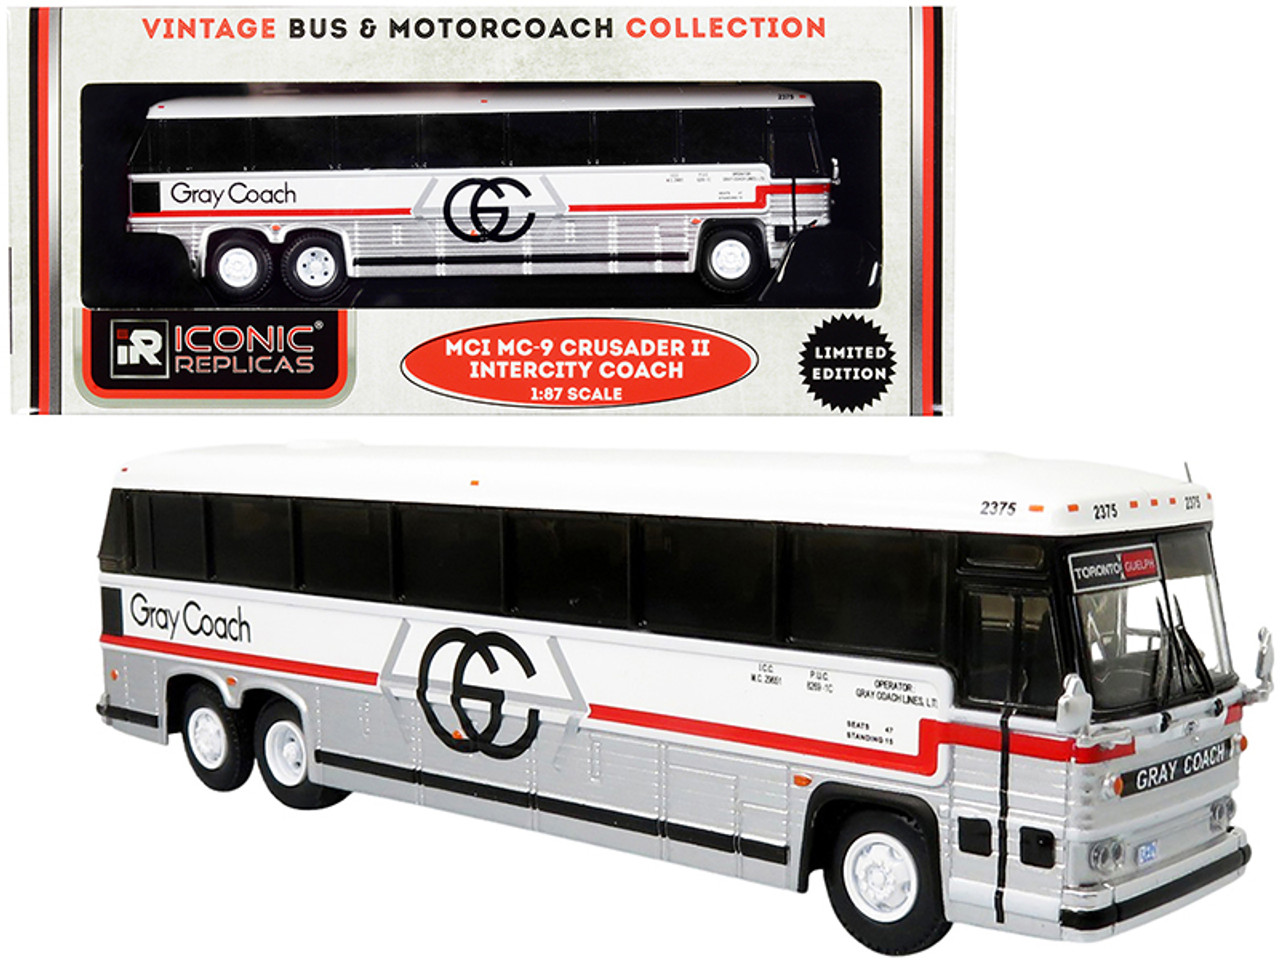 1980 MCI MC-9 Crusader II Intercity Coach Bus "Toronto - Guelph" Ontario (Canada) "Gray Coach" "Vintage Bus & Motorcoach Collection" 1/87 (HO) Diecast Model by Iconic Replicas